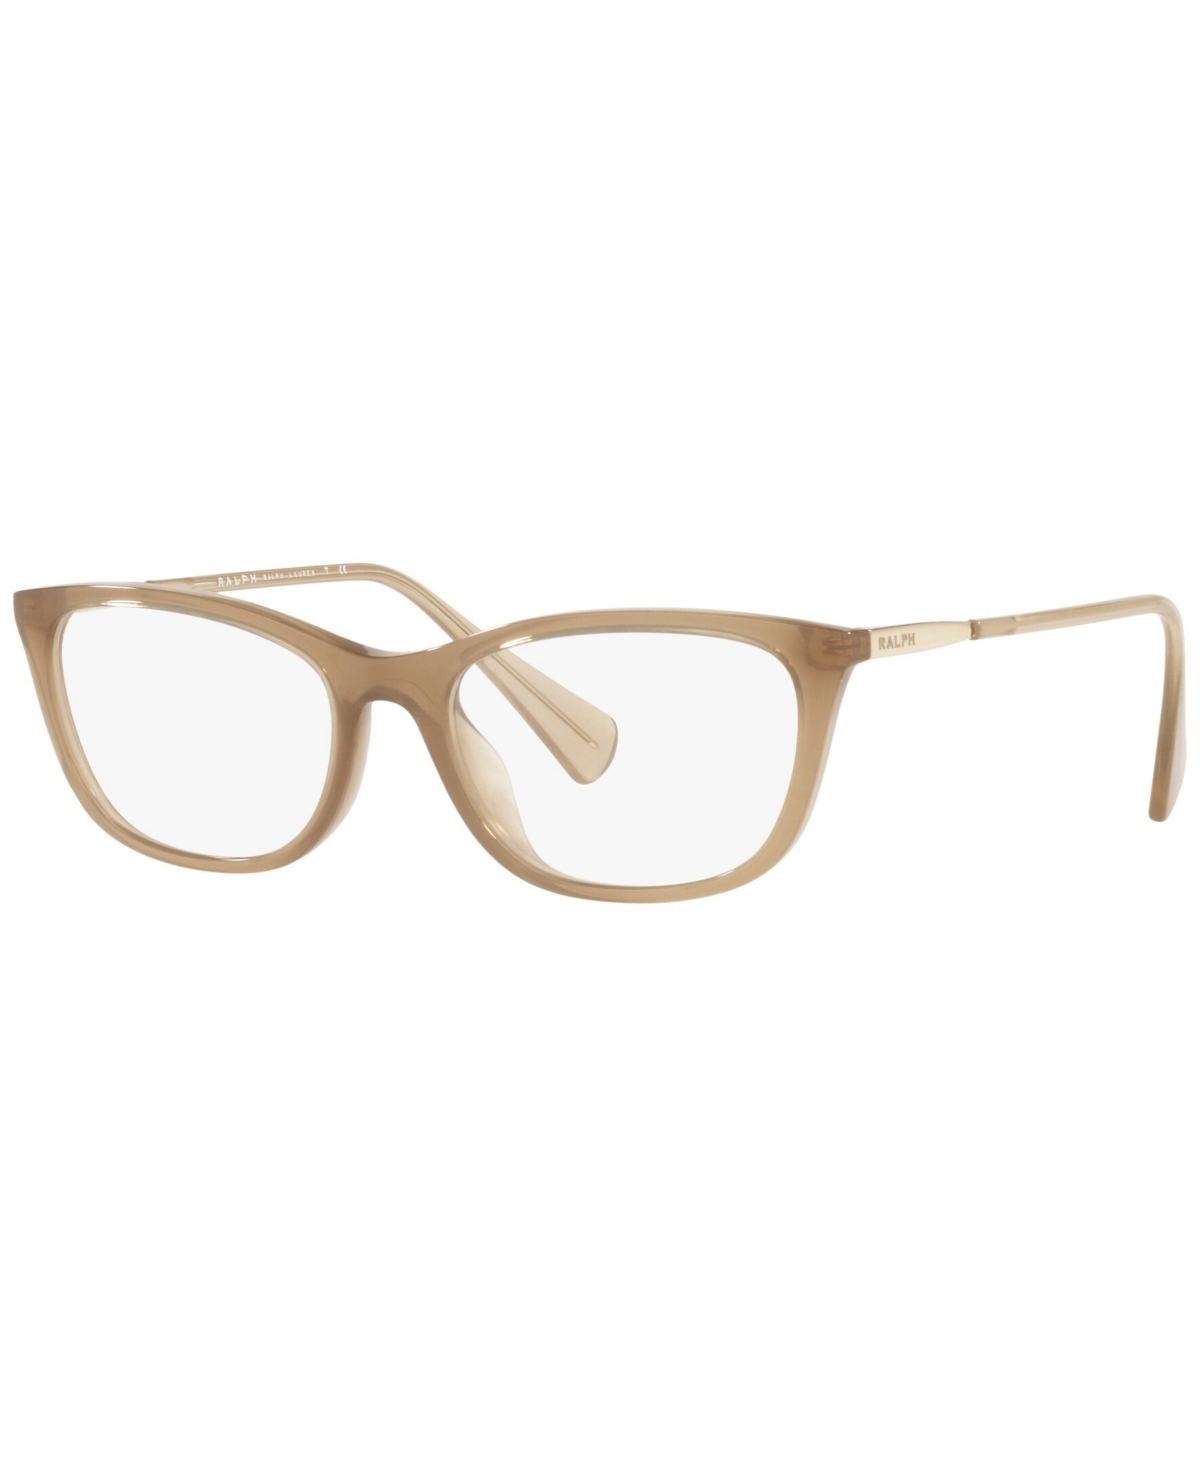 RA7138U Women's Oval Eyeglasses - Shiny Transparent Beige